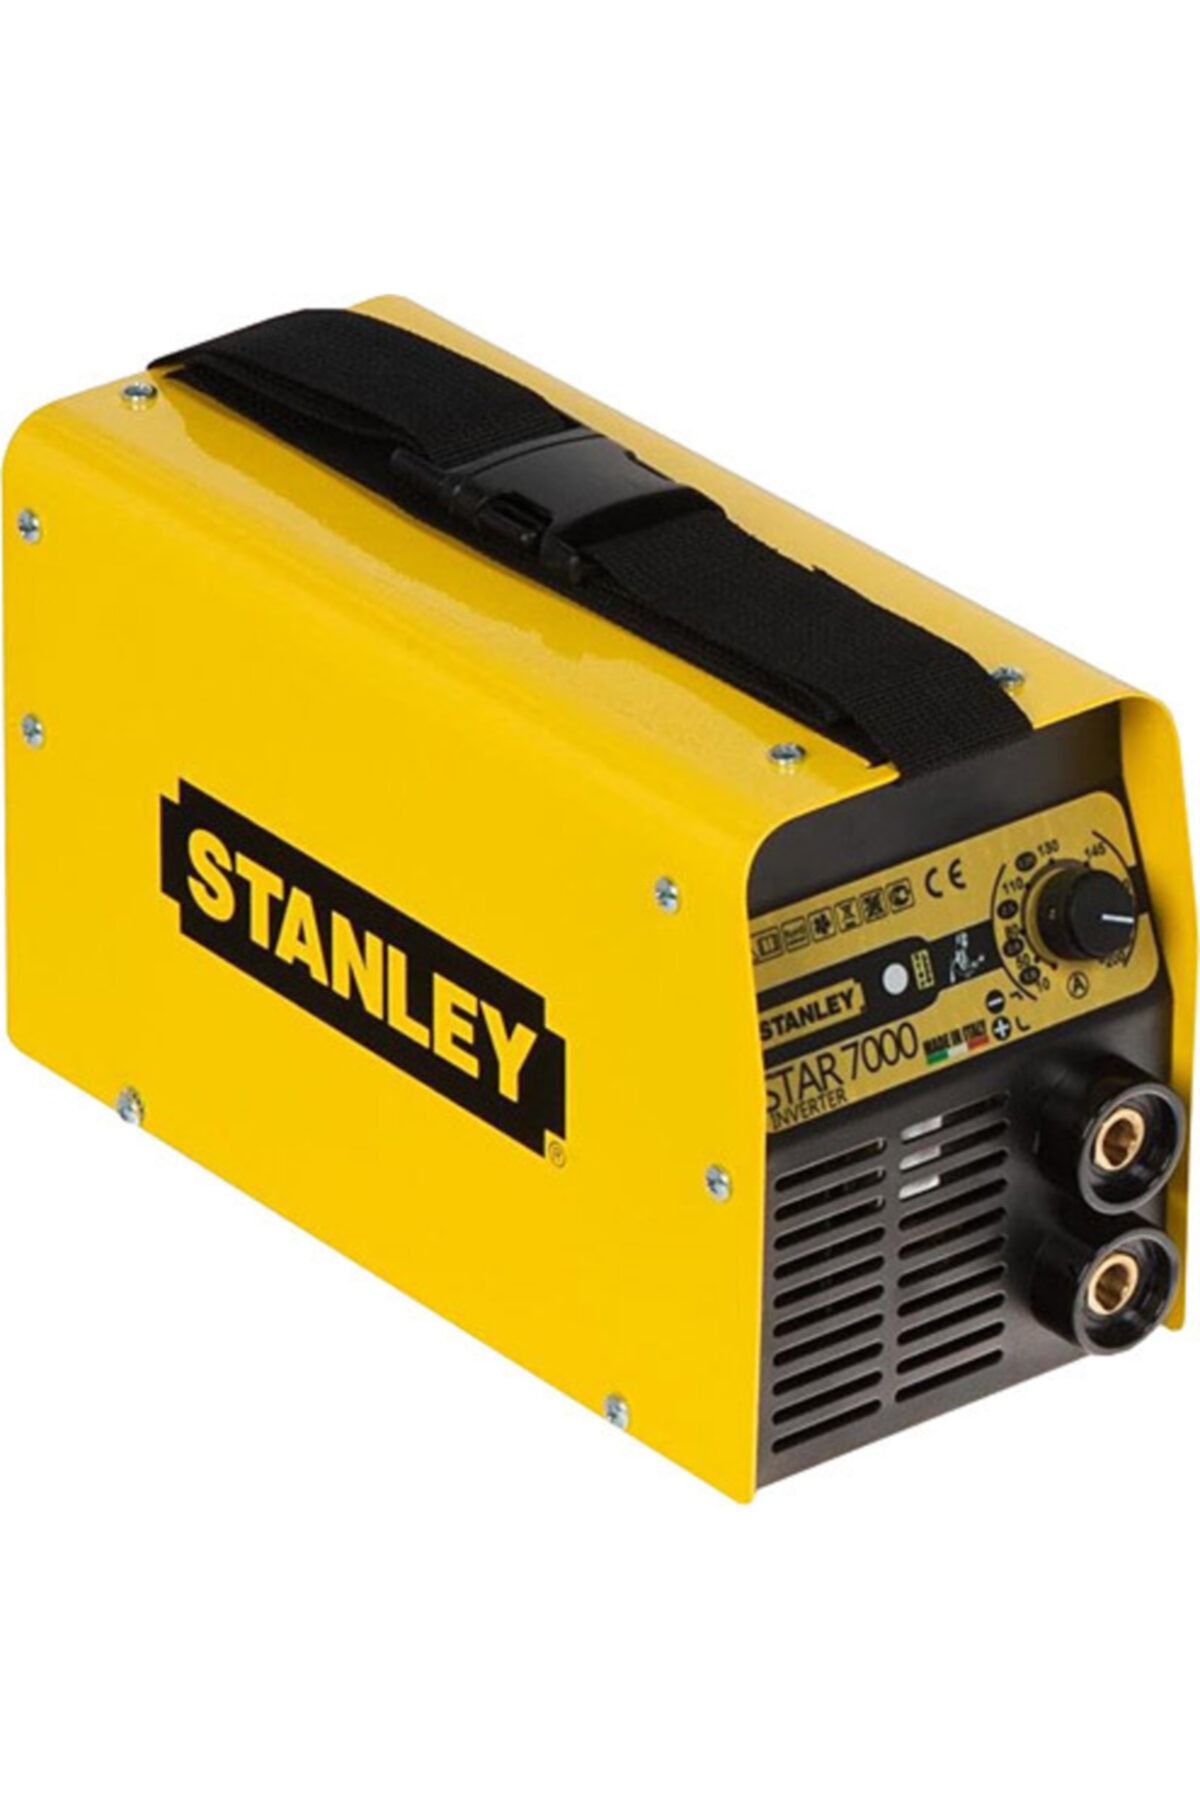 Stanley Inverter Kaynak Makinası 200amp Star7000